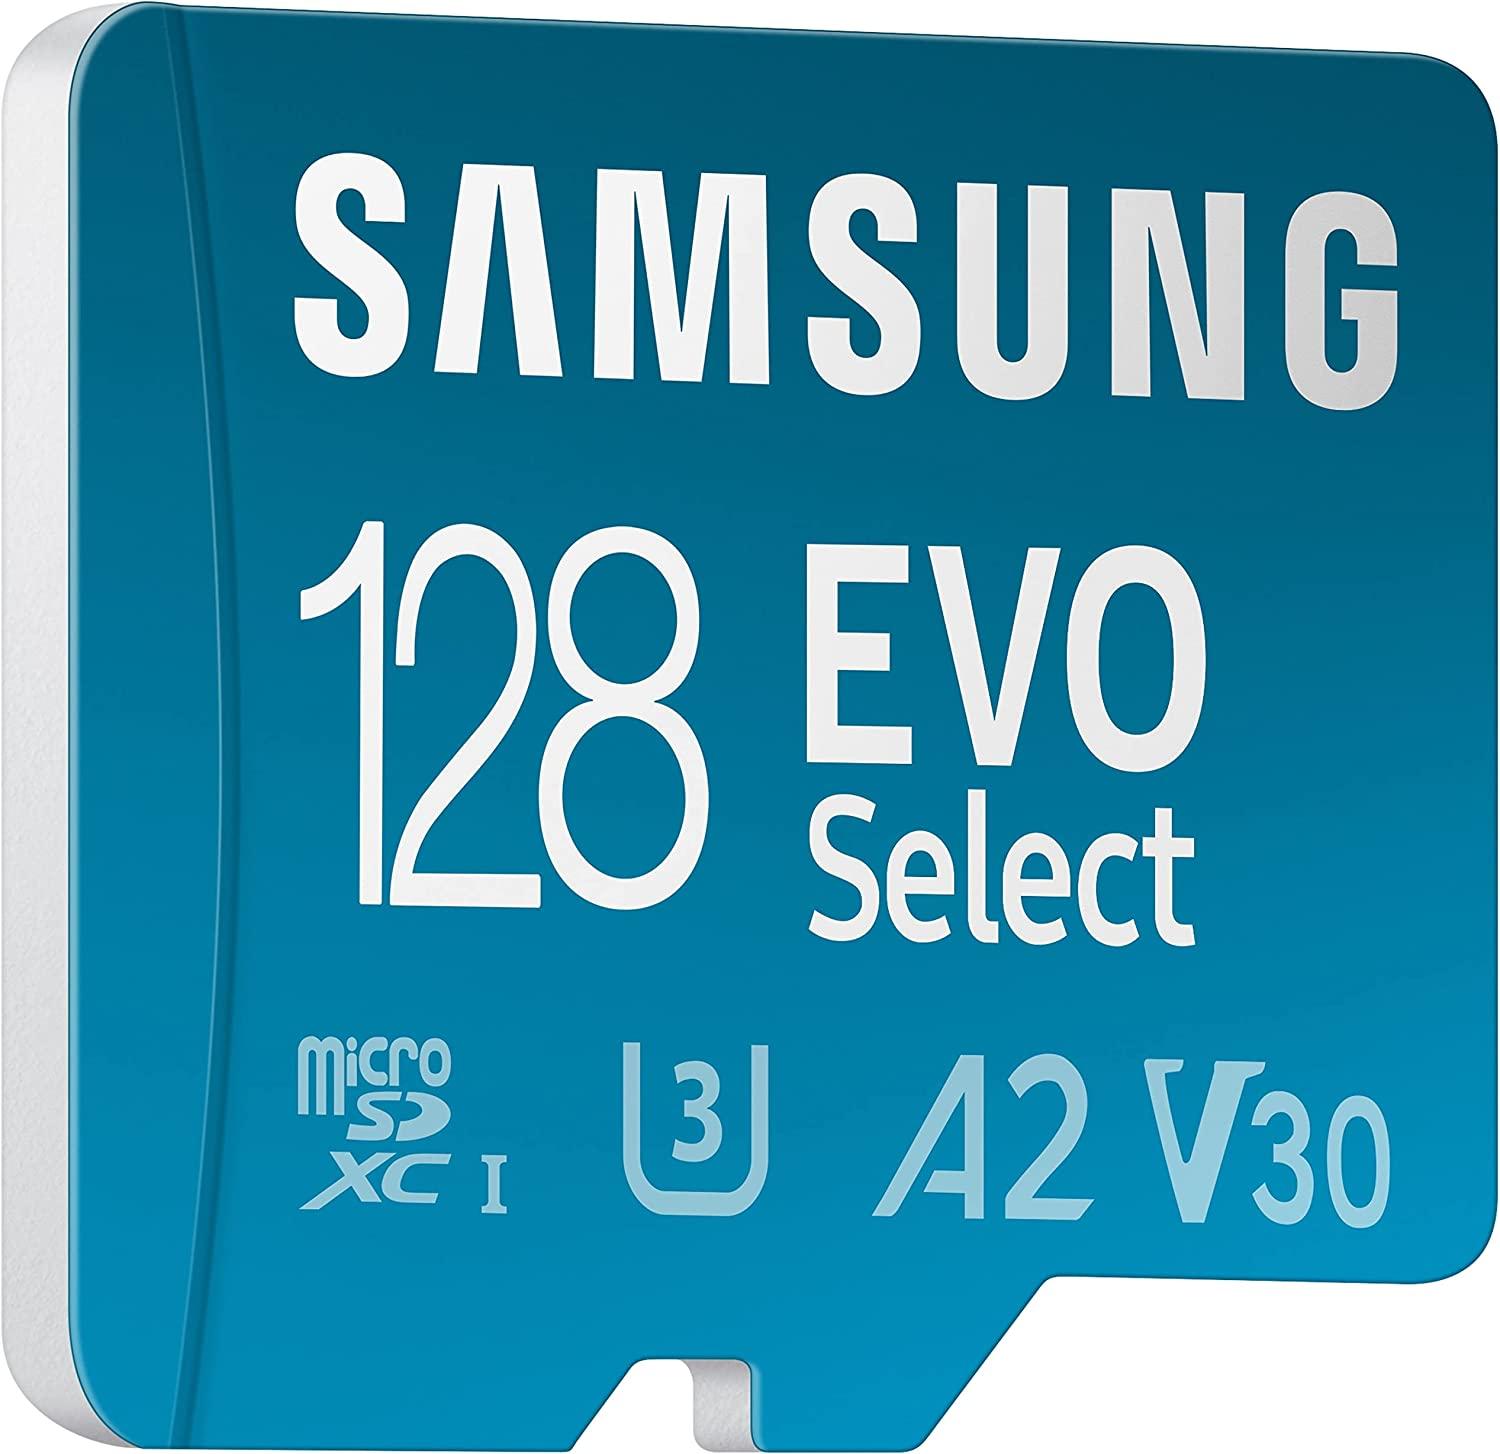 Memory card Samsung microSD U3 128GB 